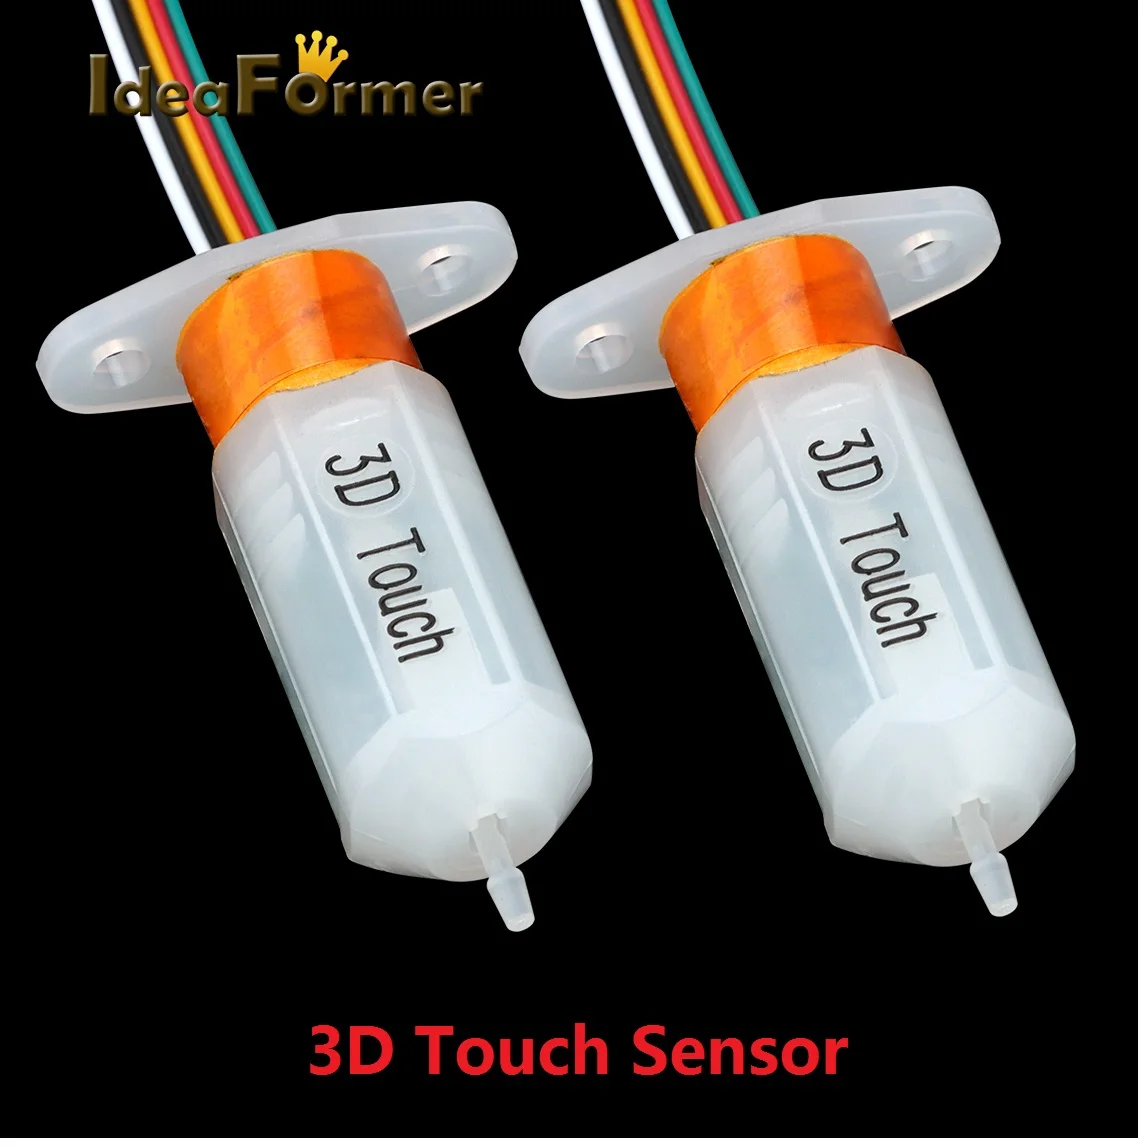 IdeaFormer 3DTouch Sensor Auto Bed Leveling Sensor 3D Printer Parts For CR10 CR10S Ender 3 Pro Anet A8 tevo Reprap mk8 i3